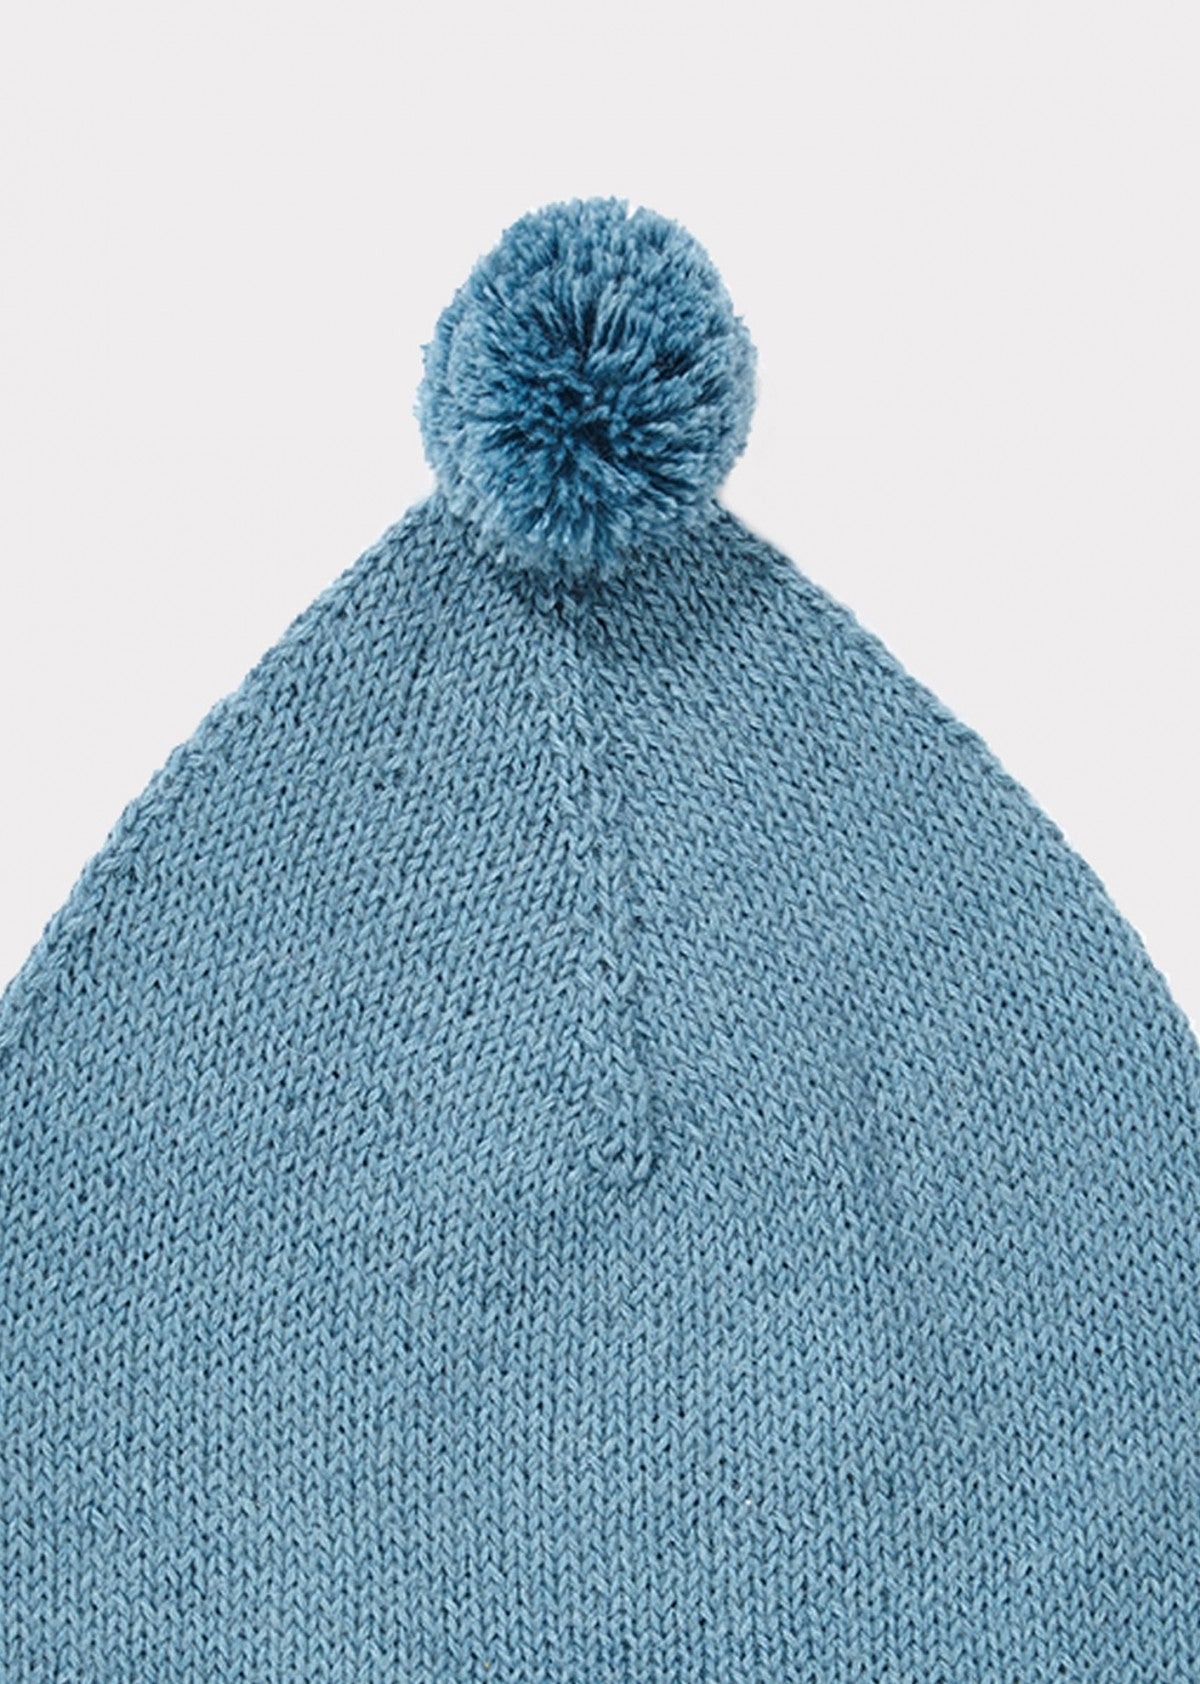 Girls Blue Alpaca Wool Hat